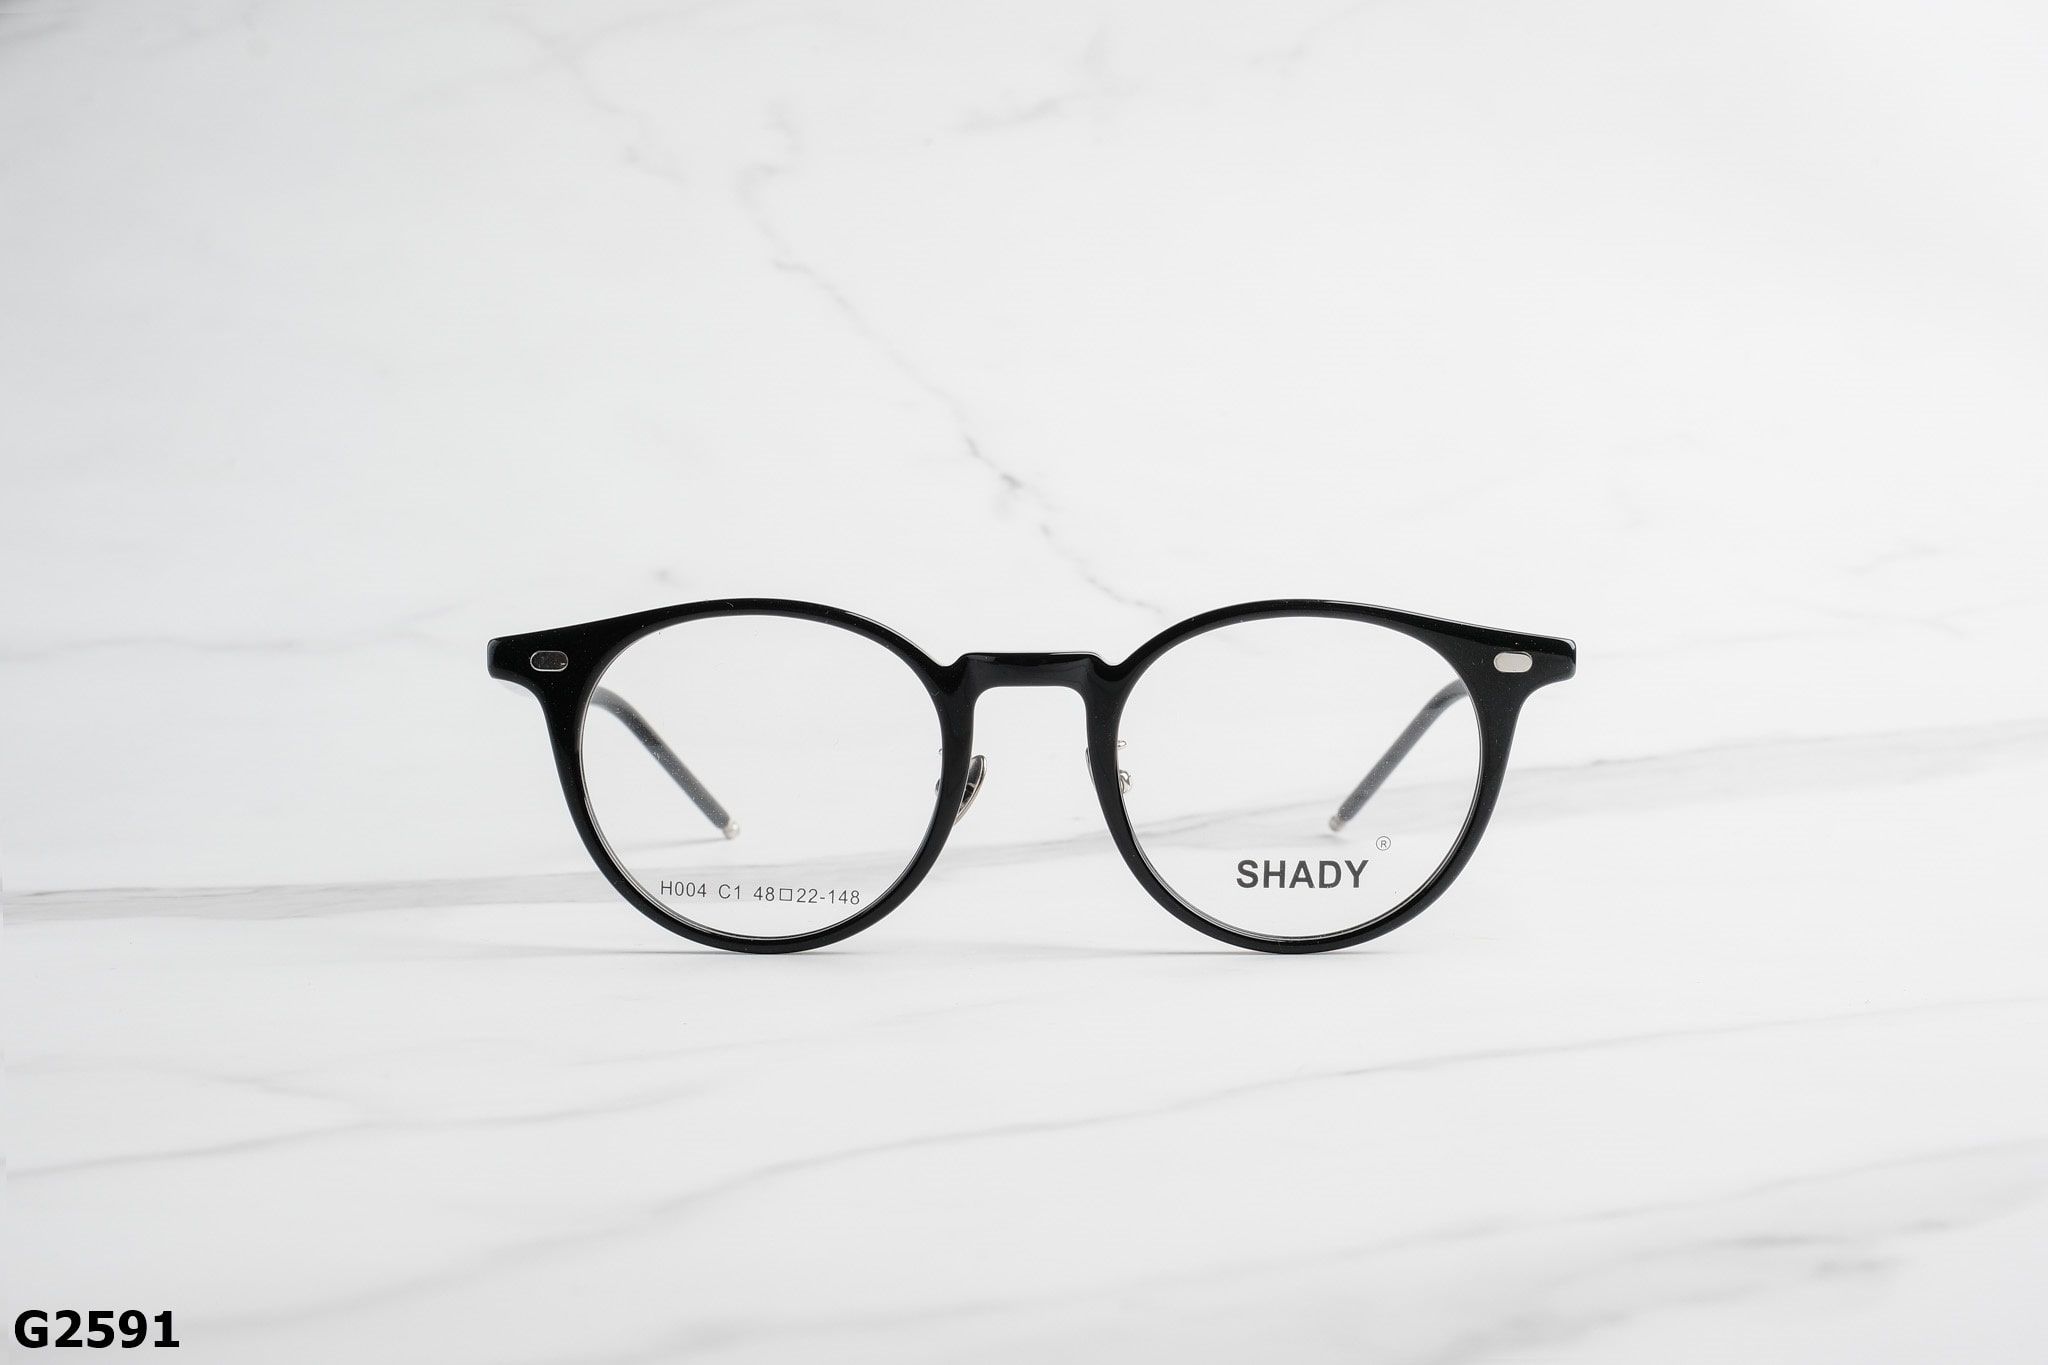  SHADY Eyewear - Glasses - G2591 